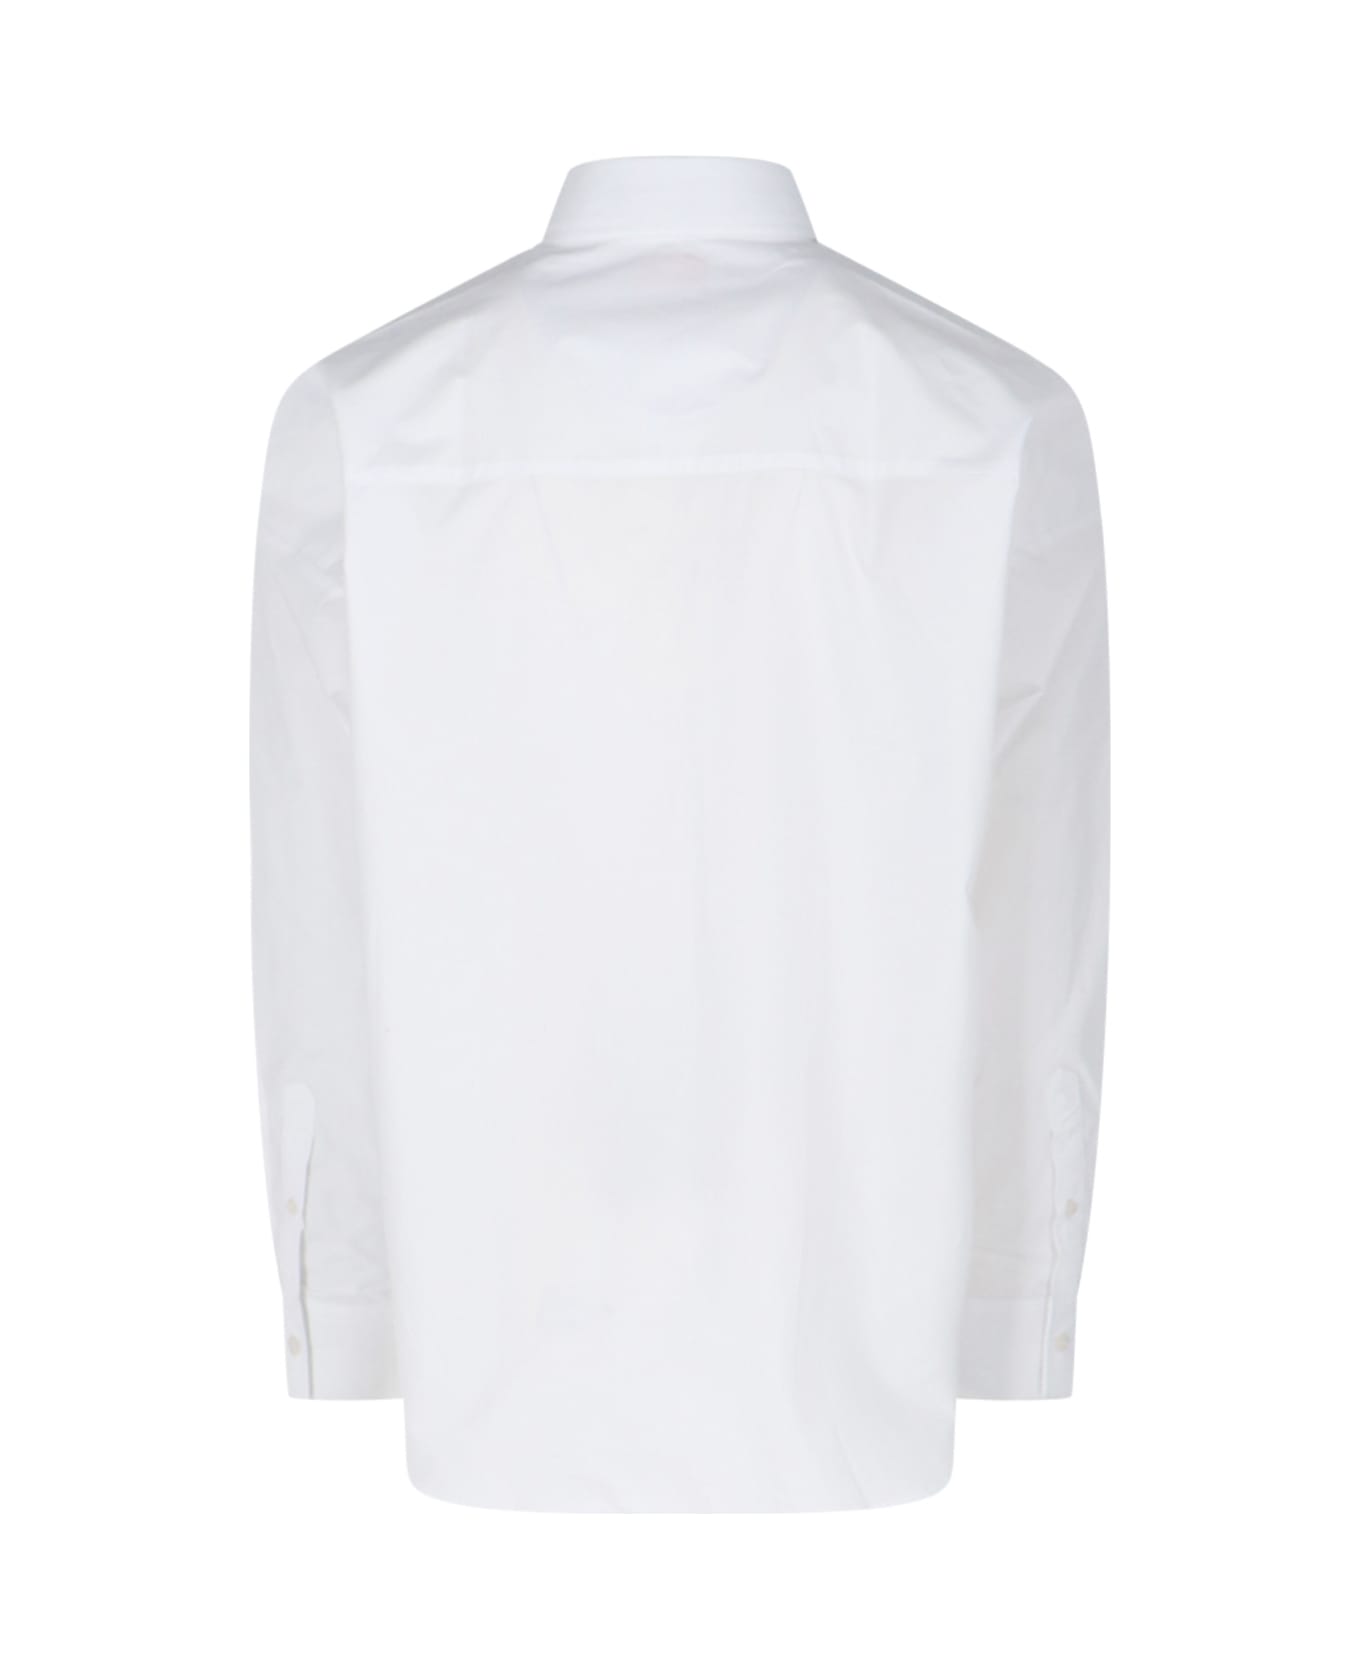 Diesel 'oval-d' Logo Shirt - Bianco